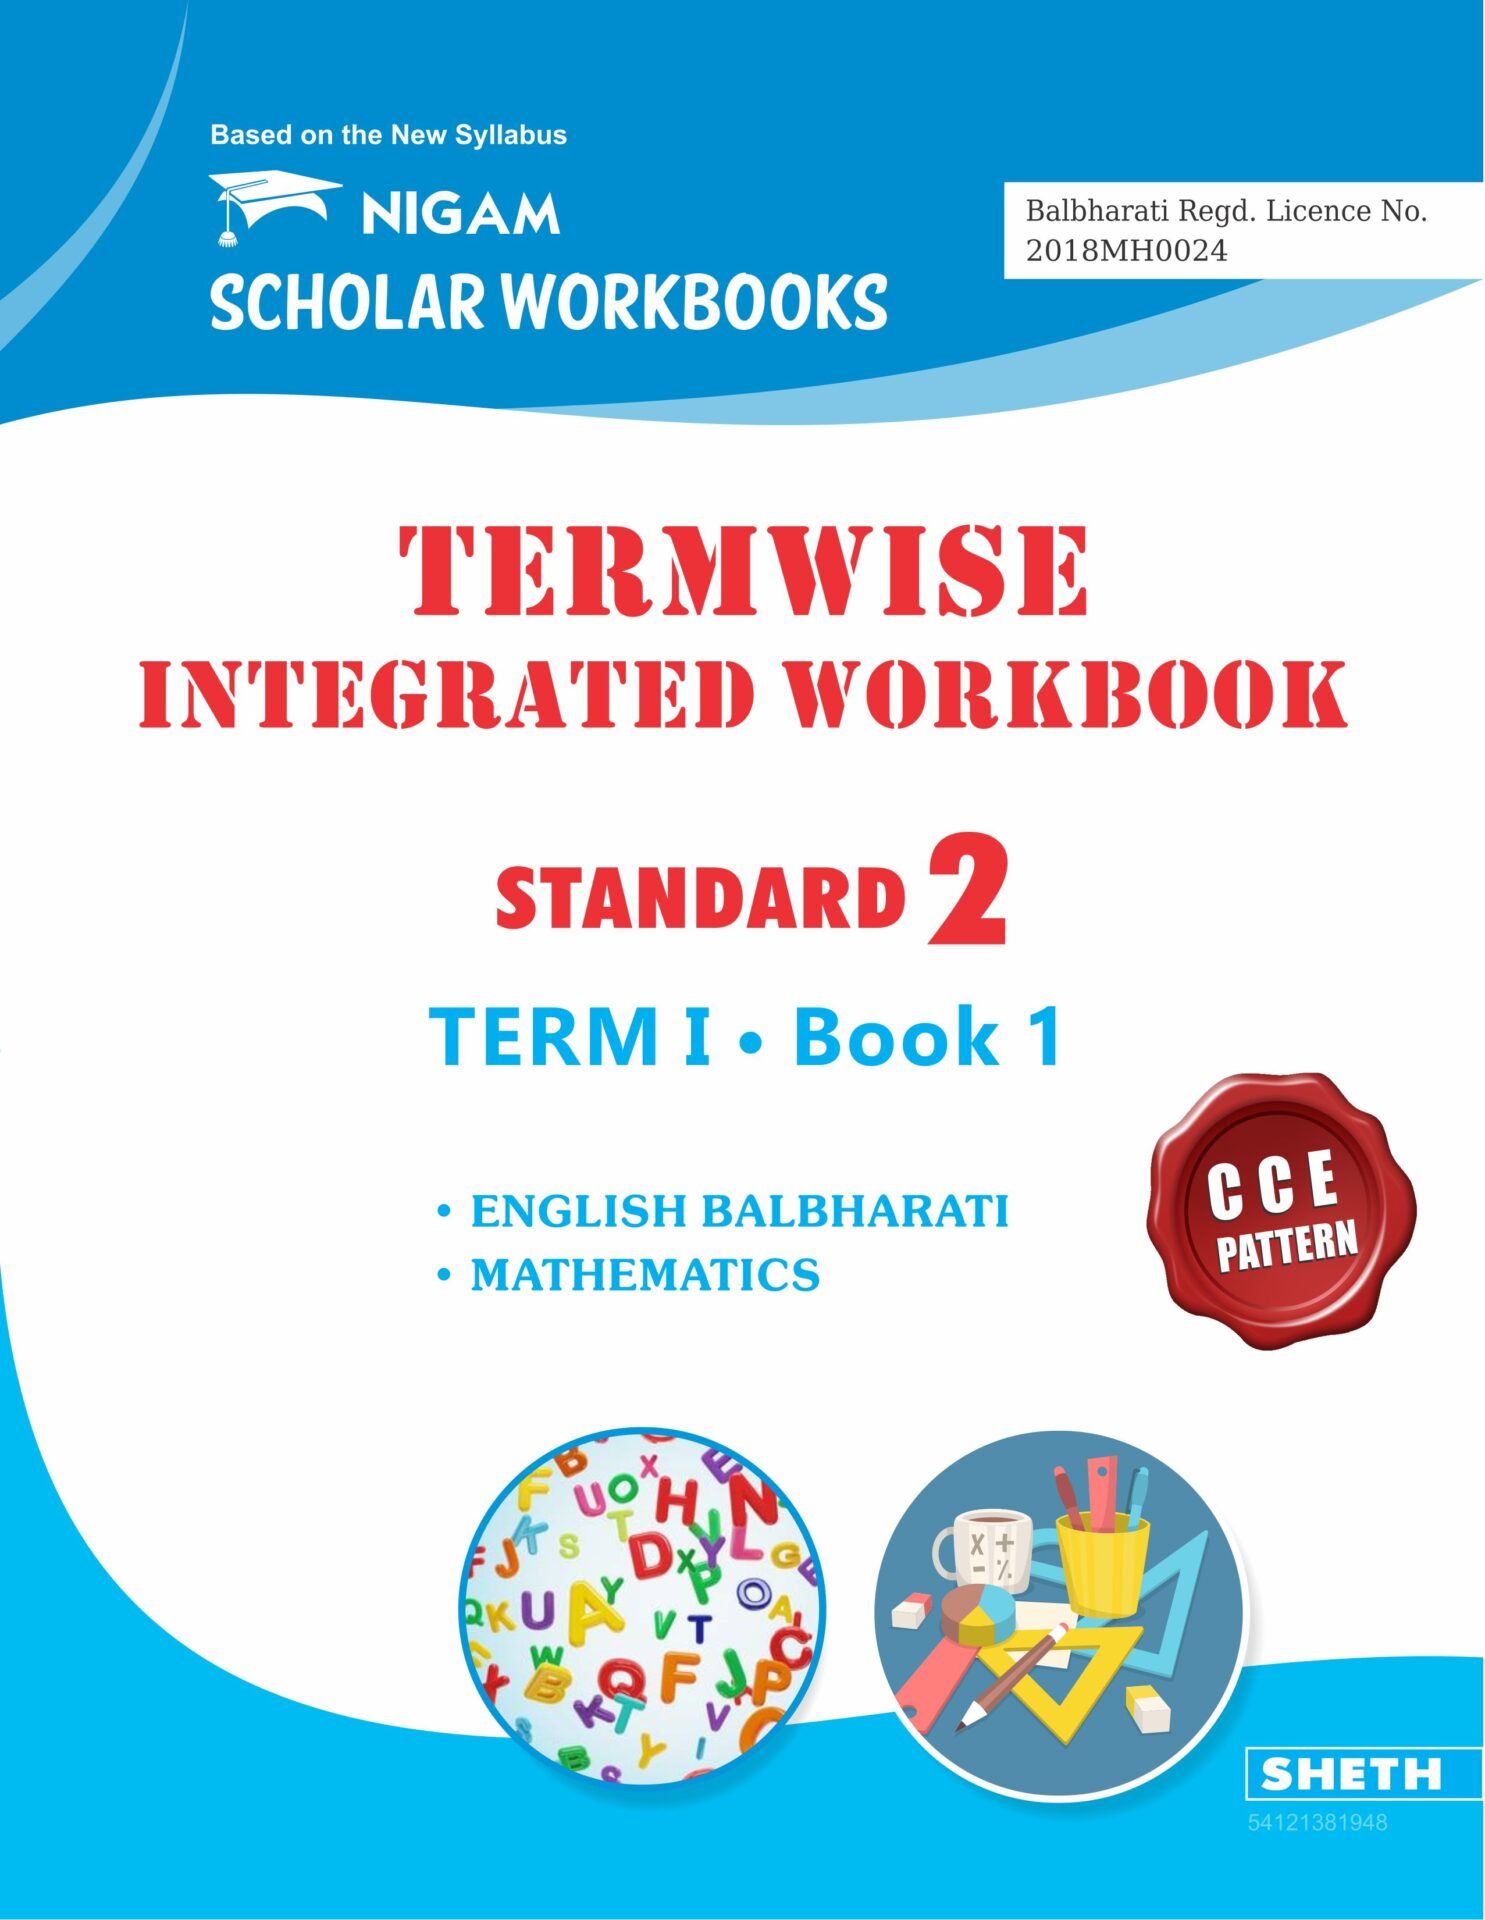 CCE Pattern Nigam Scholar Workbooks Termwise Integrated Workbook English Balbharati and Mathematics Standard 2 Term 1 Book 1 1